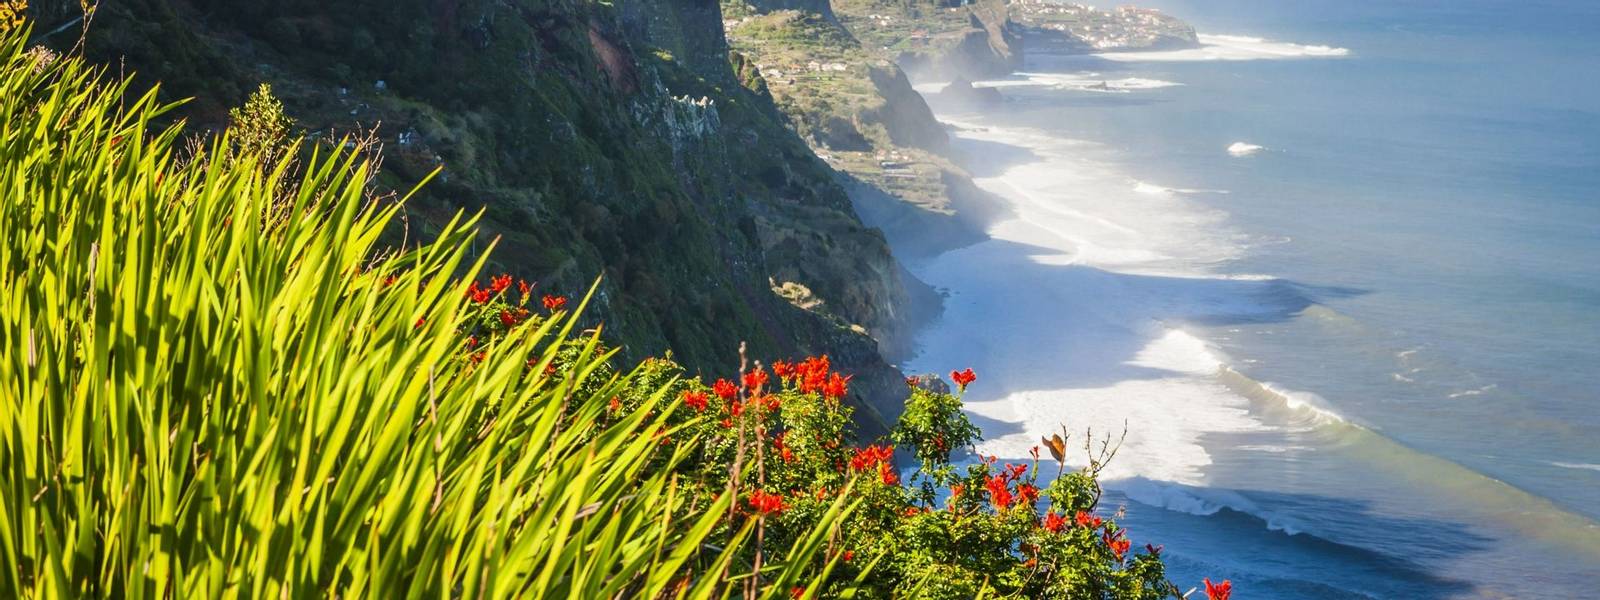 Portugal - Madeira - AdobeStock_64289406.jpeg